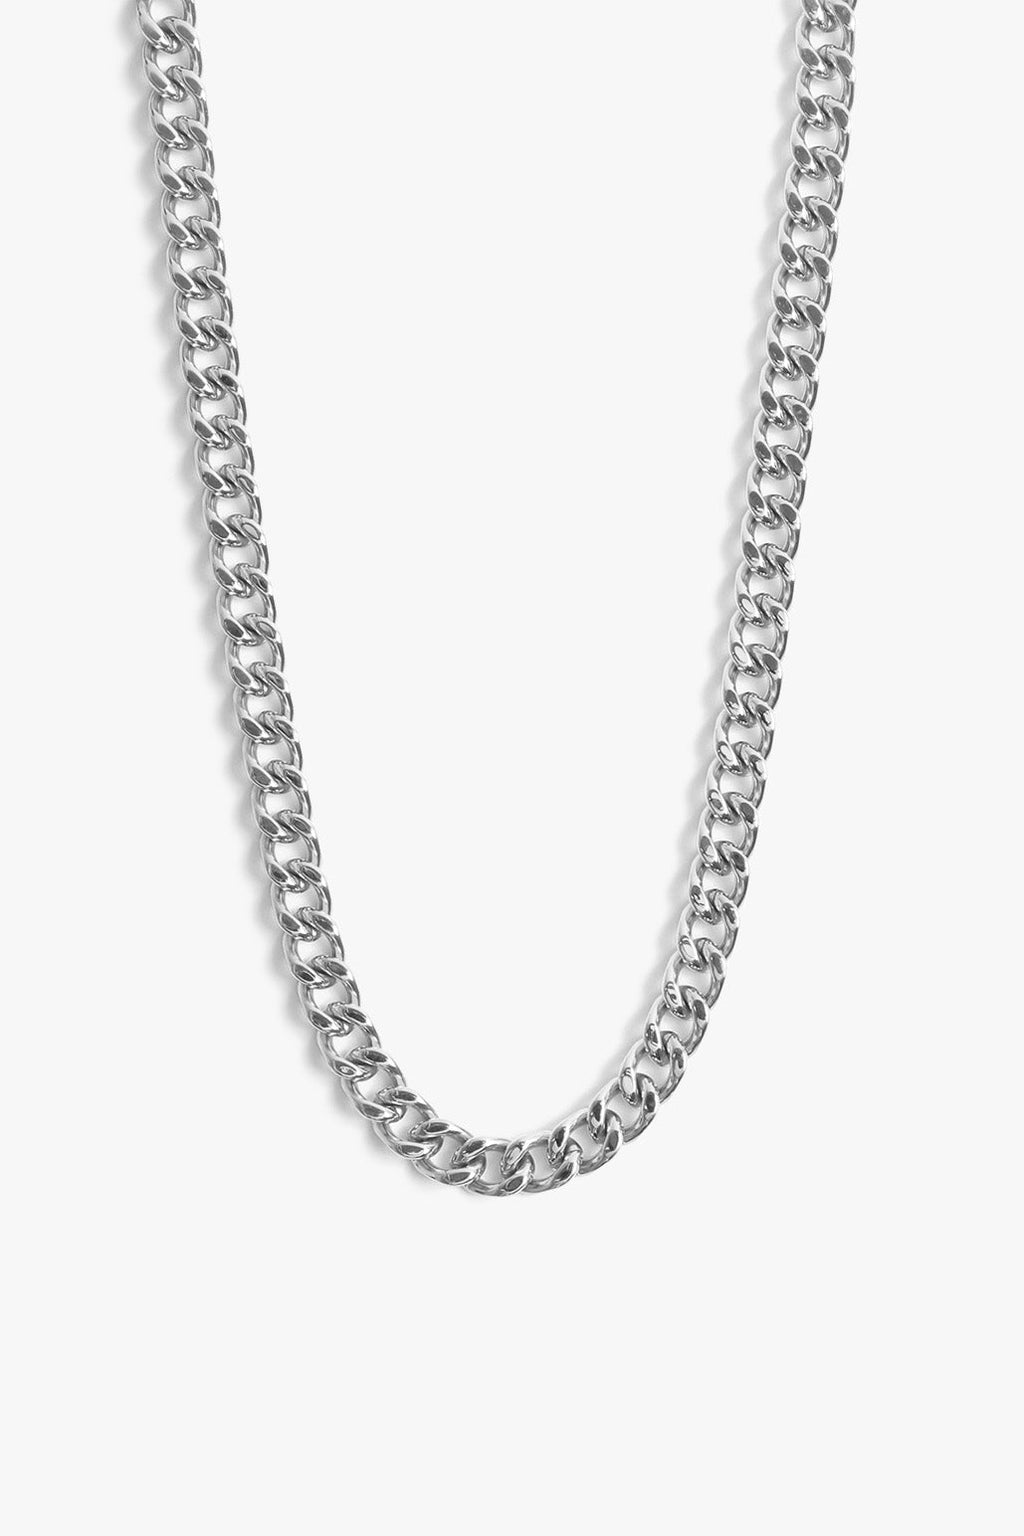 Marrin Costello Jewelry - Queens Chain - Silver